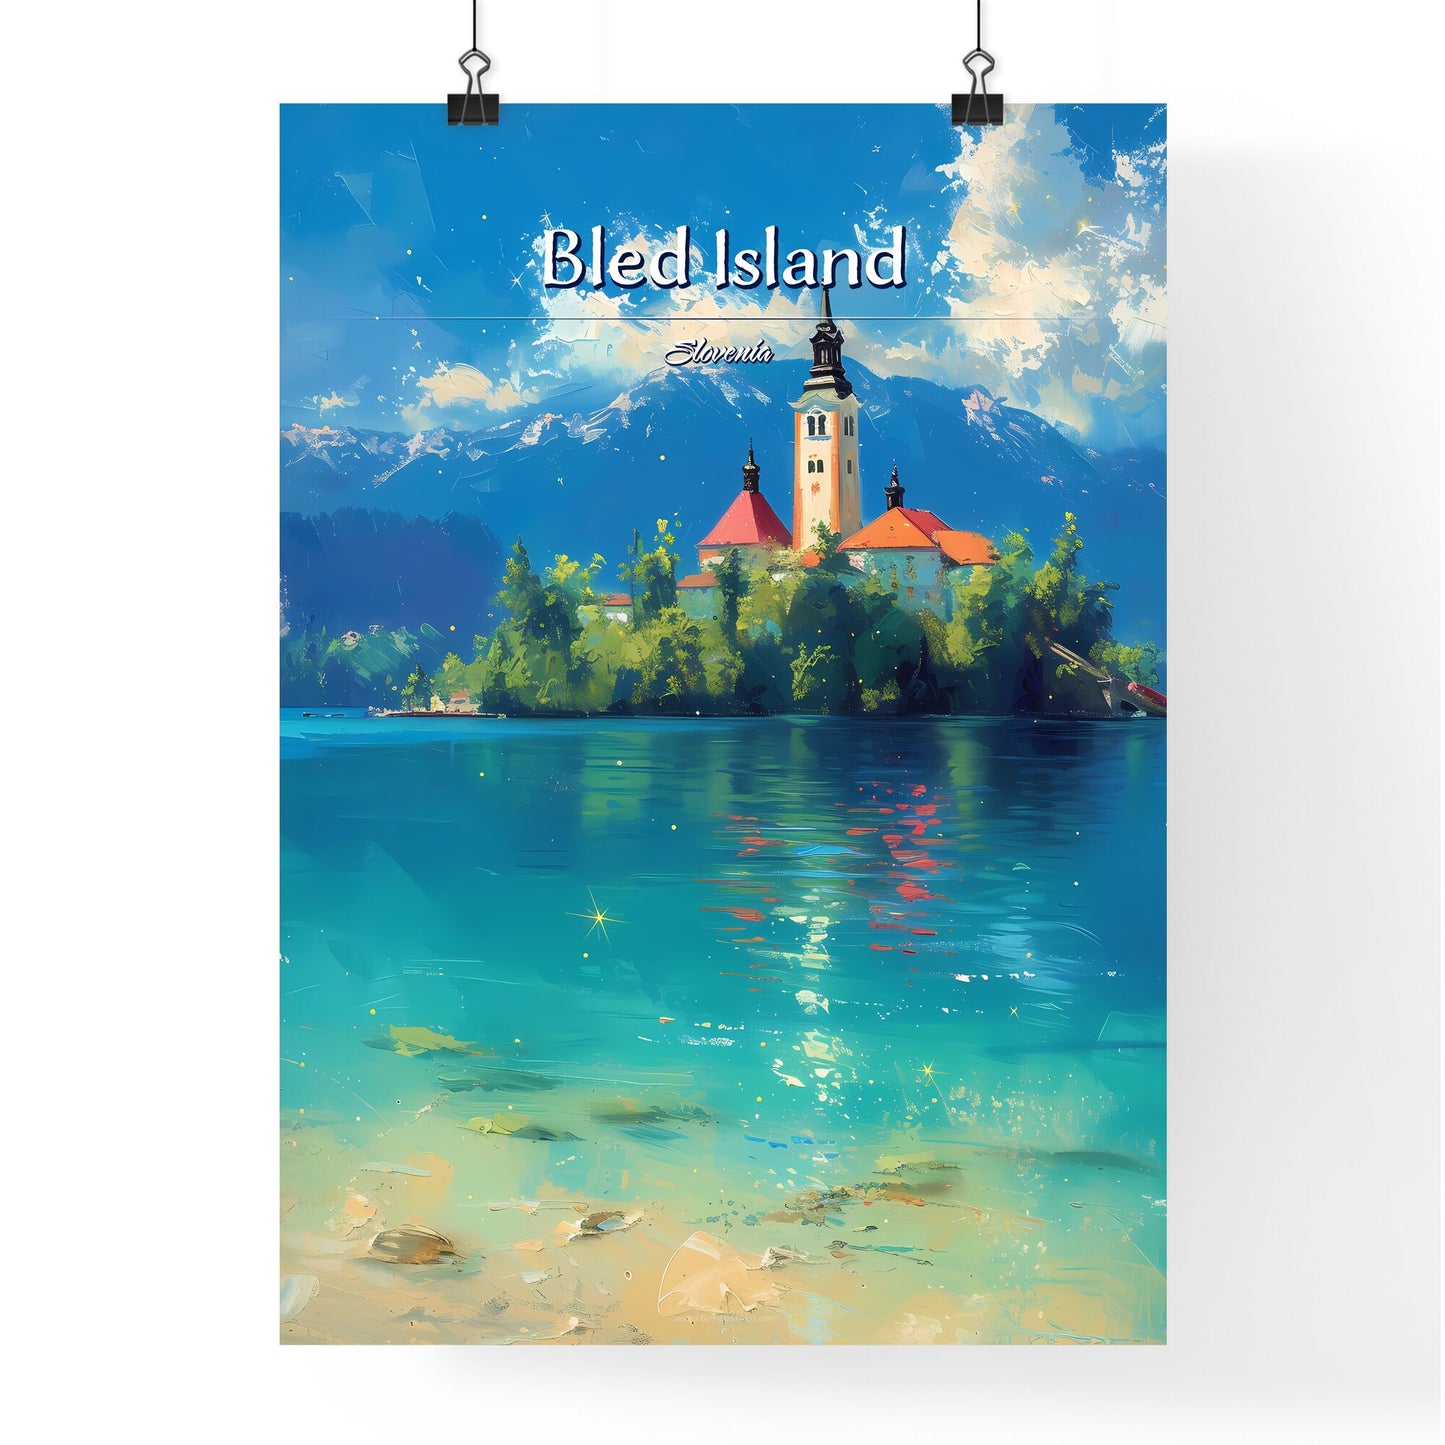 Bled Island, Slovenia - Art print of a close up of a flag Default Title